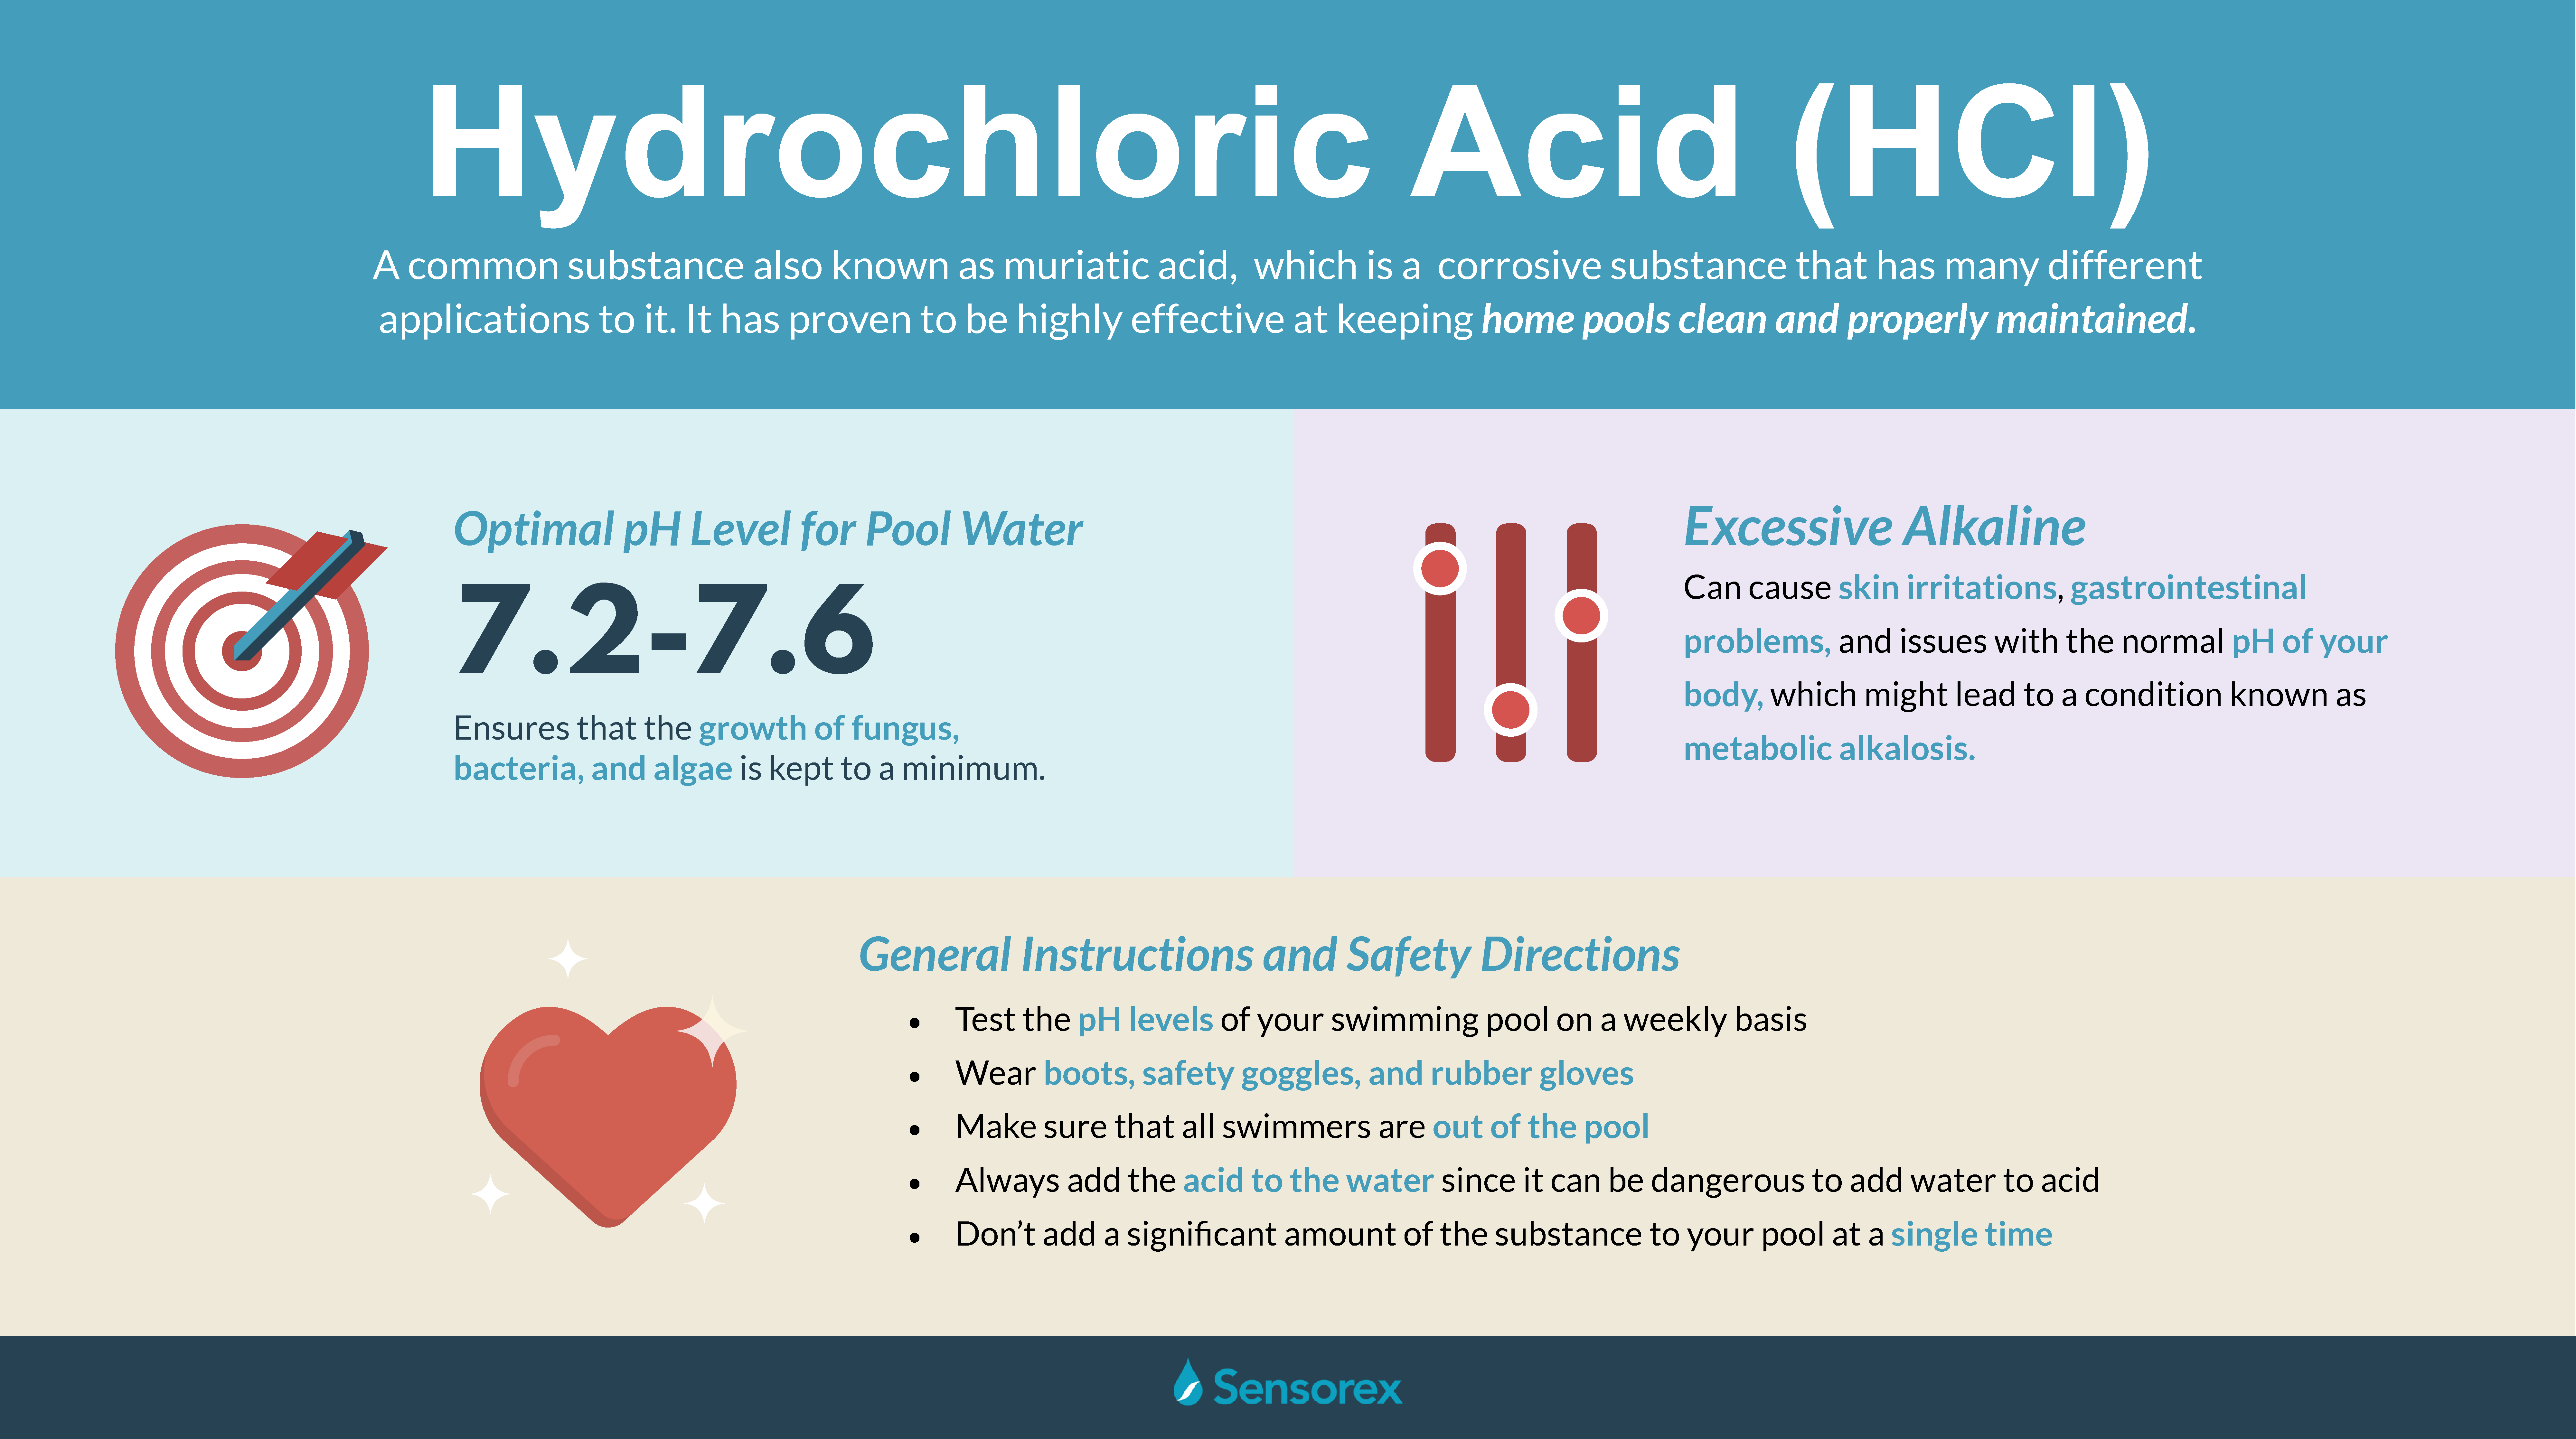 Ph value of hydrochloric acid